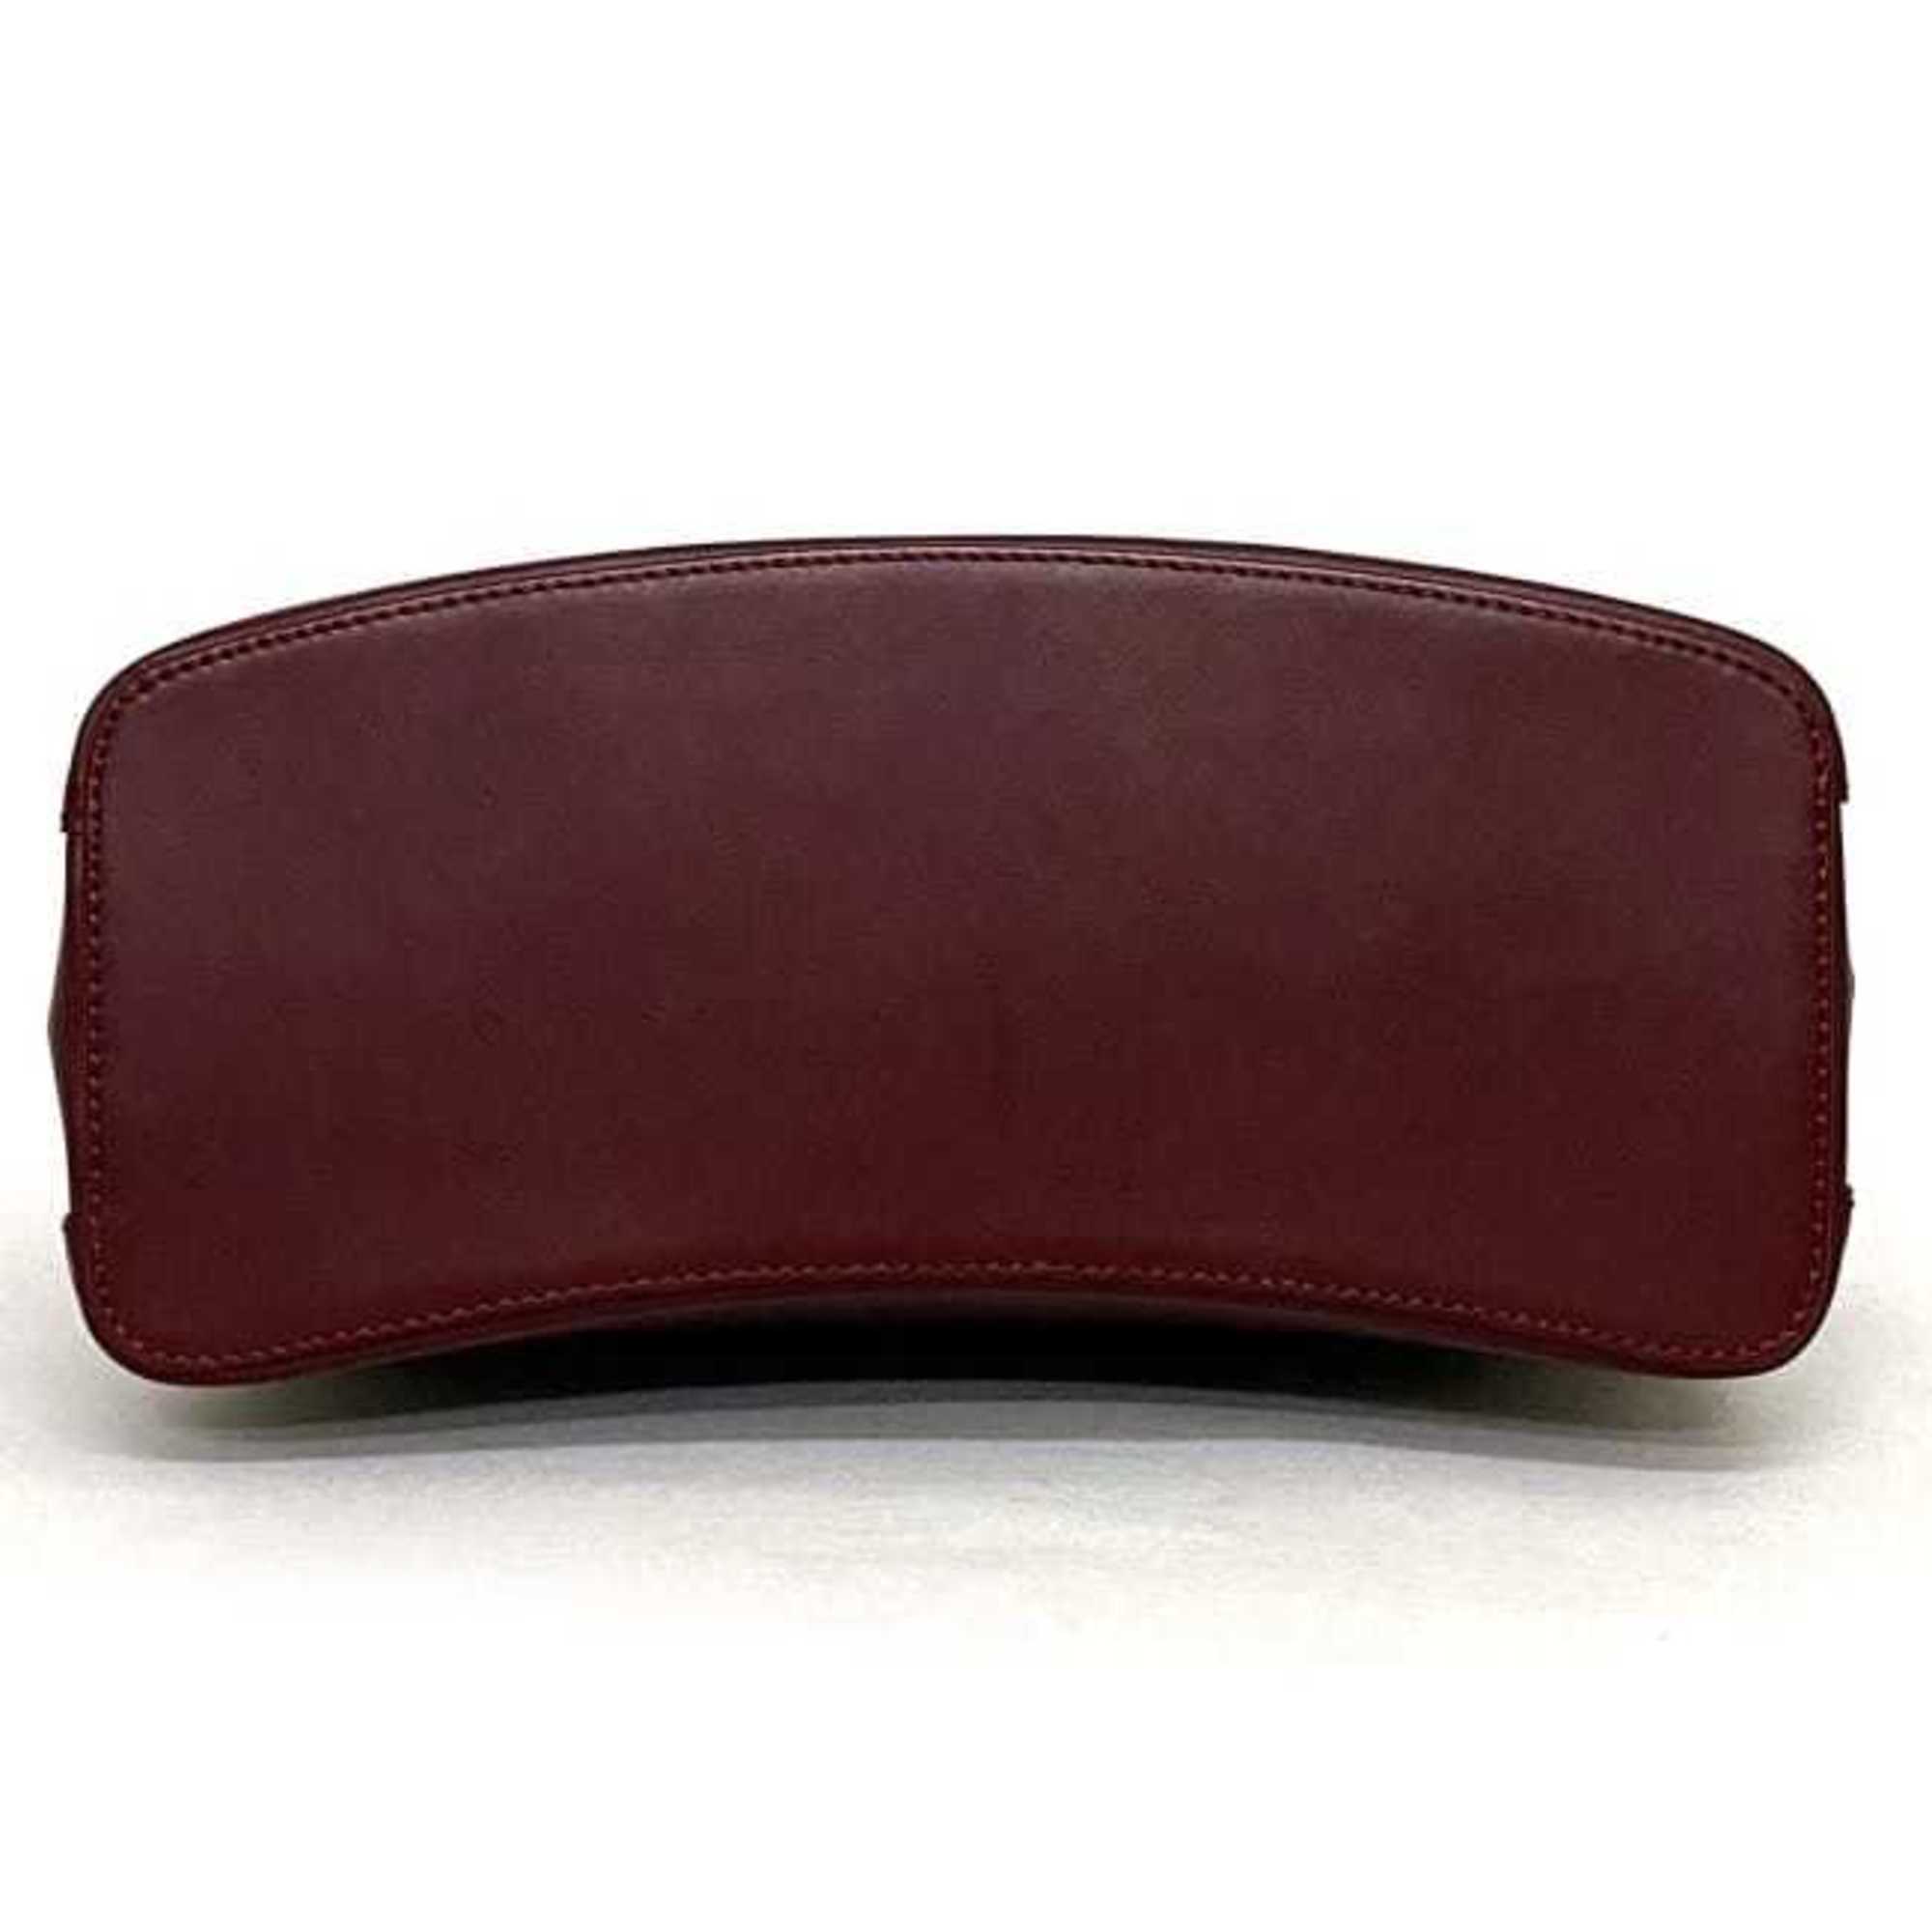 Cartier Handbag Bordeaux Trinity Tote Bag Calf Leather GP Handle Bellows Metal Fittings Ladies